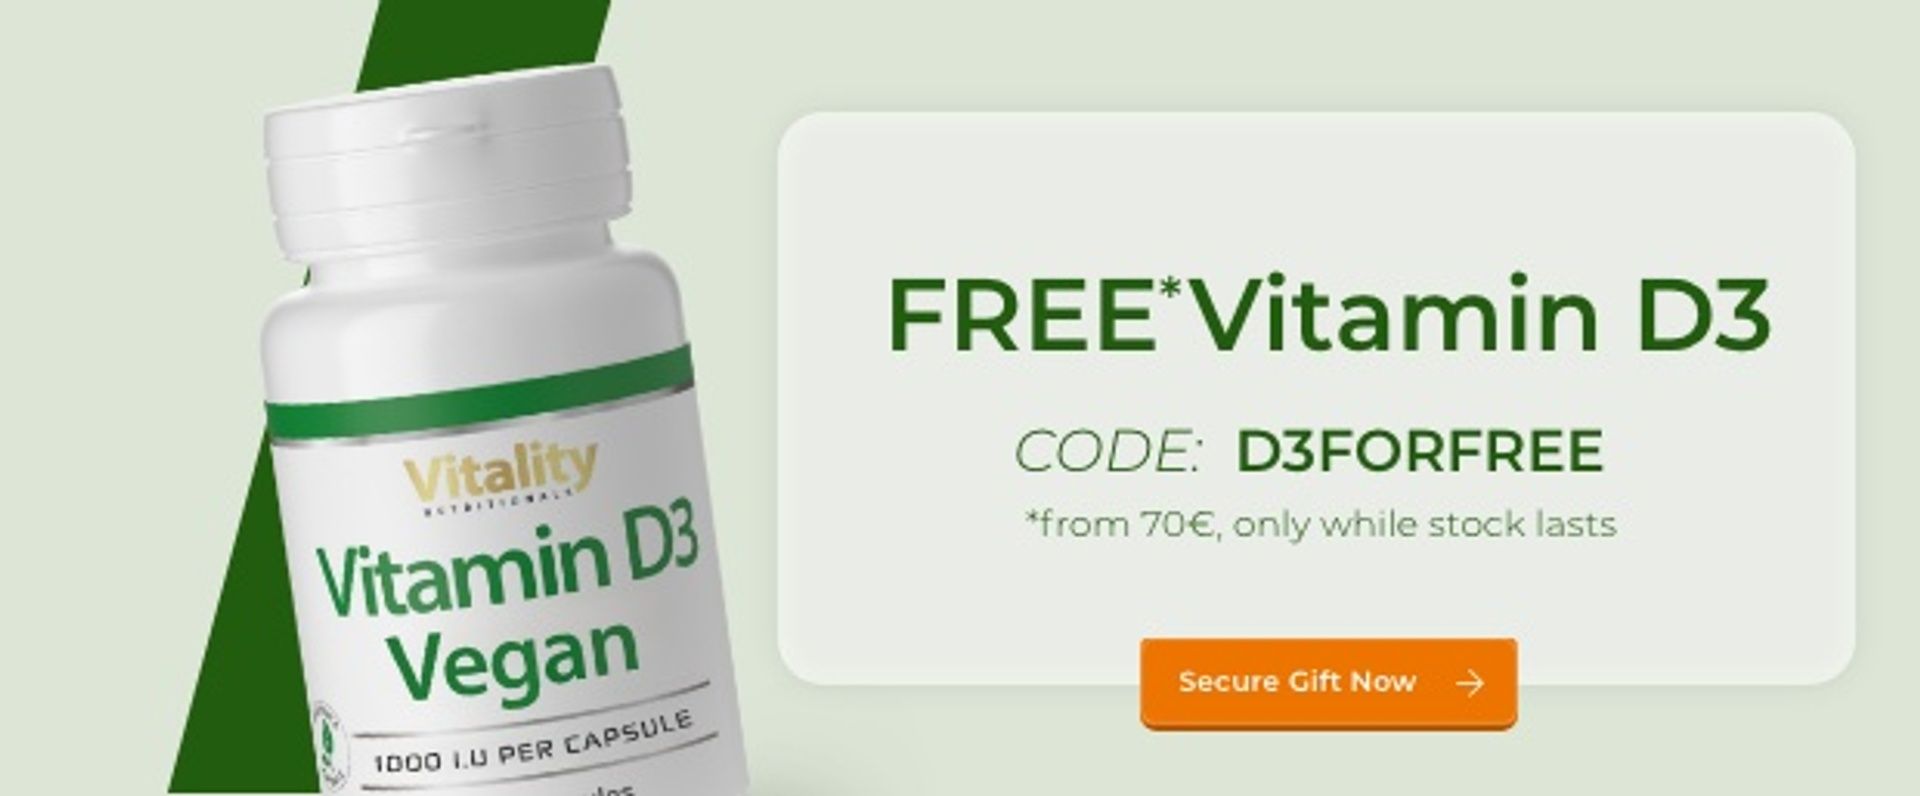 VE_GWP_Vitamin-D3_Vegan_1000_IE_620x257_UK.png